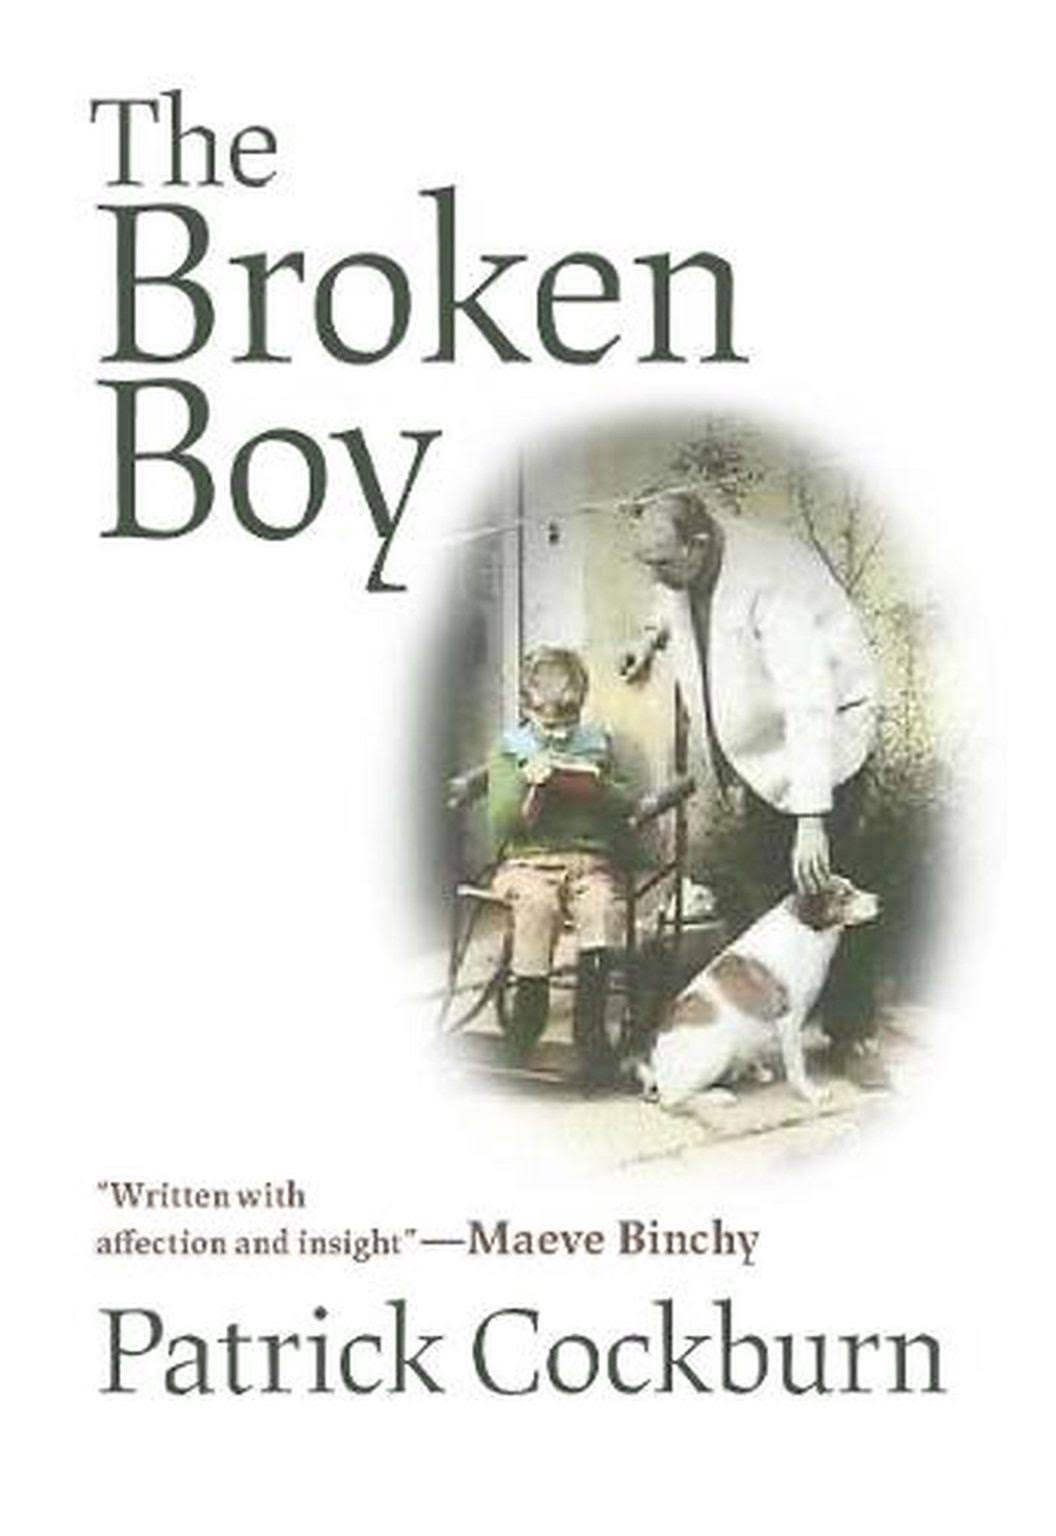 The Broken Boy [Book]